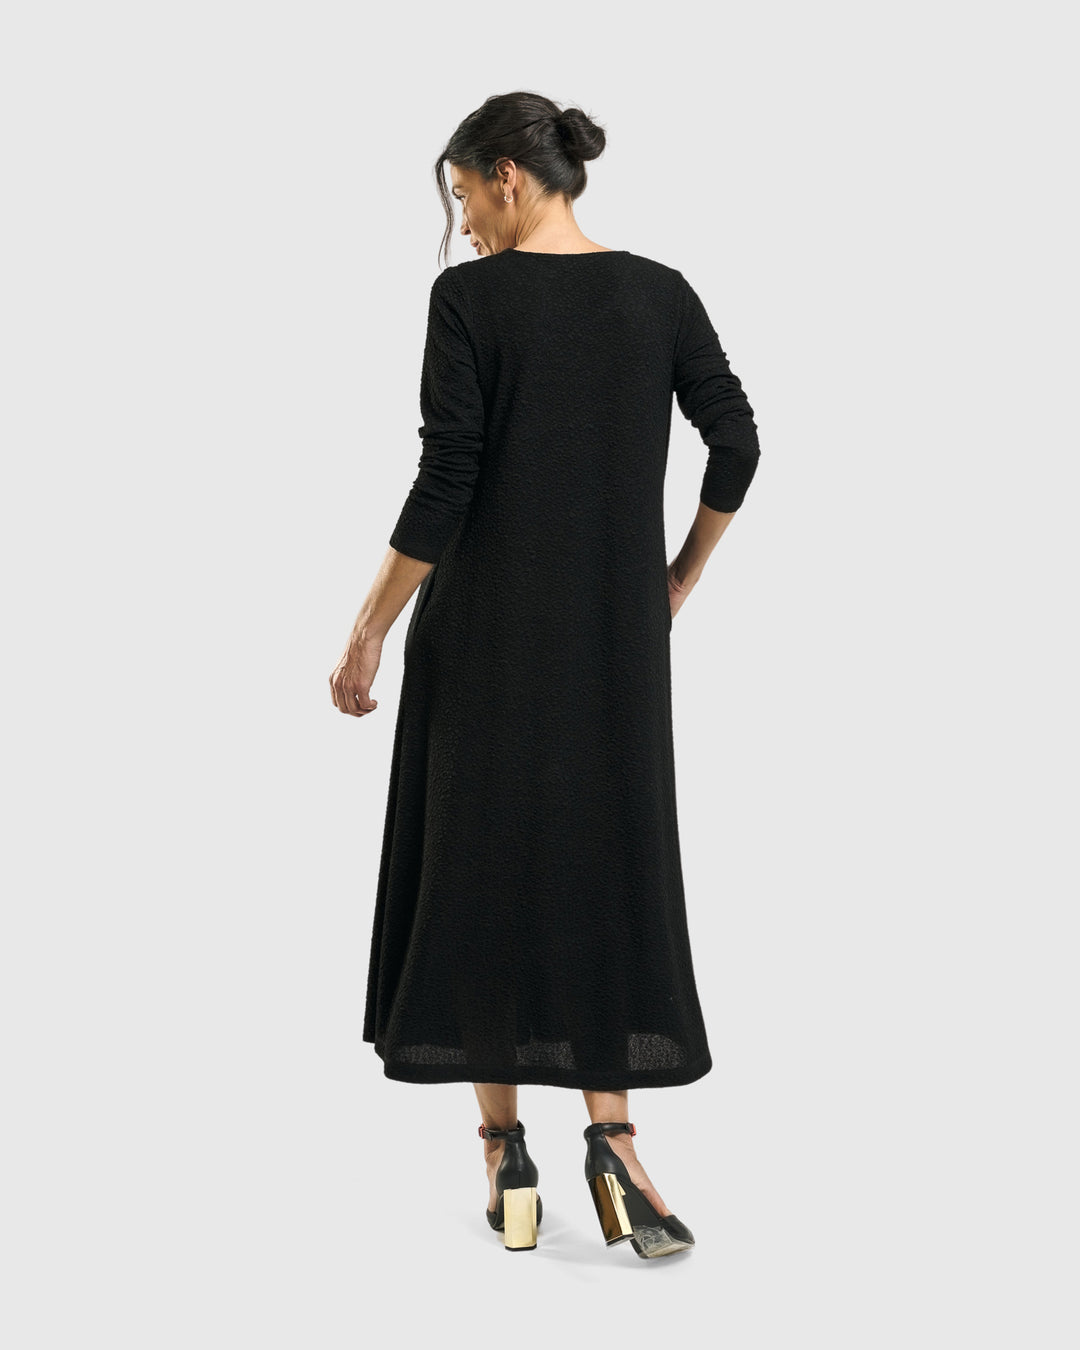 Sabrina A-Line Dress, Black